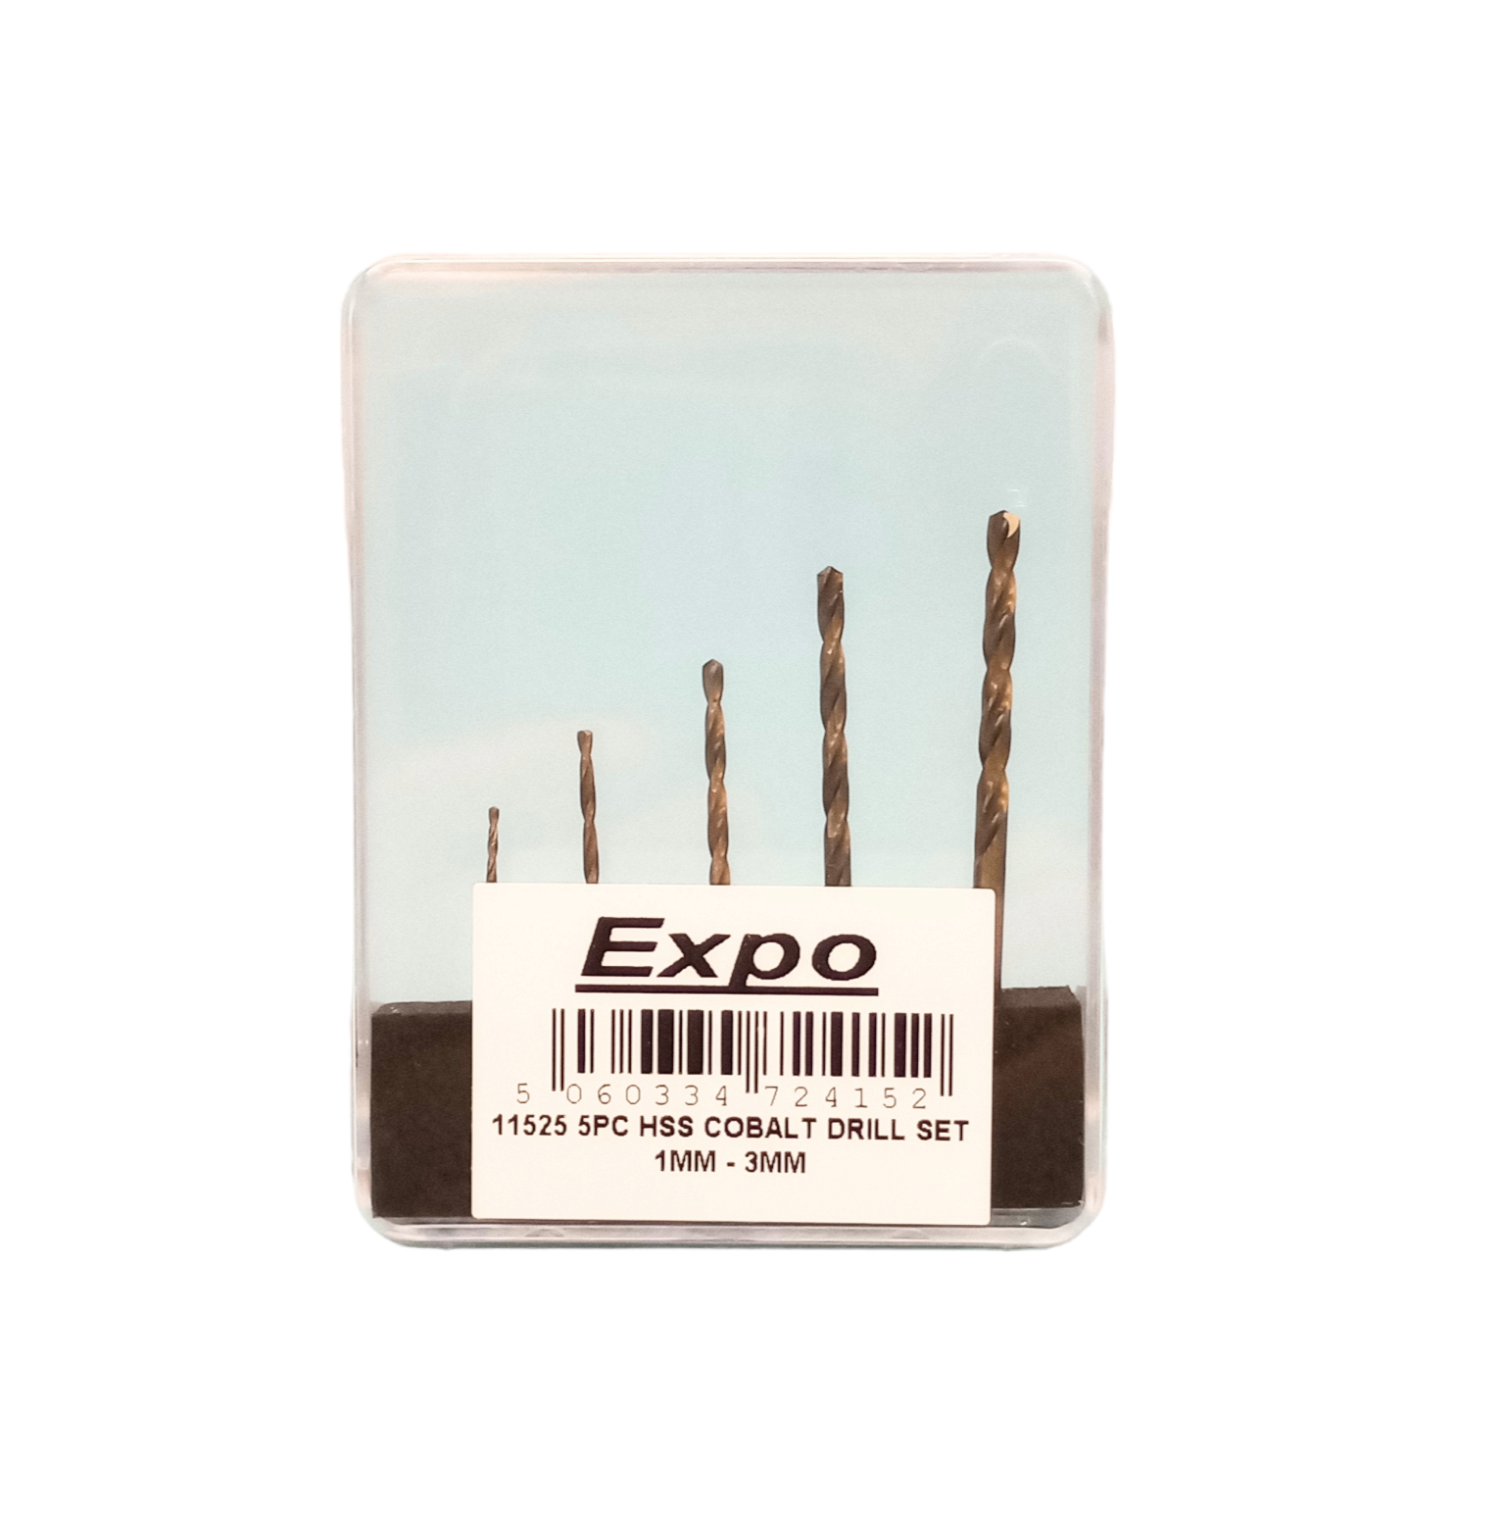 Expo Tools HSS Cobalt Drill Set (5pc) 11525